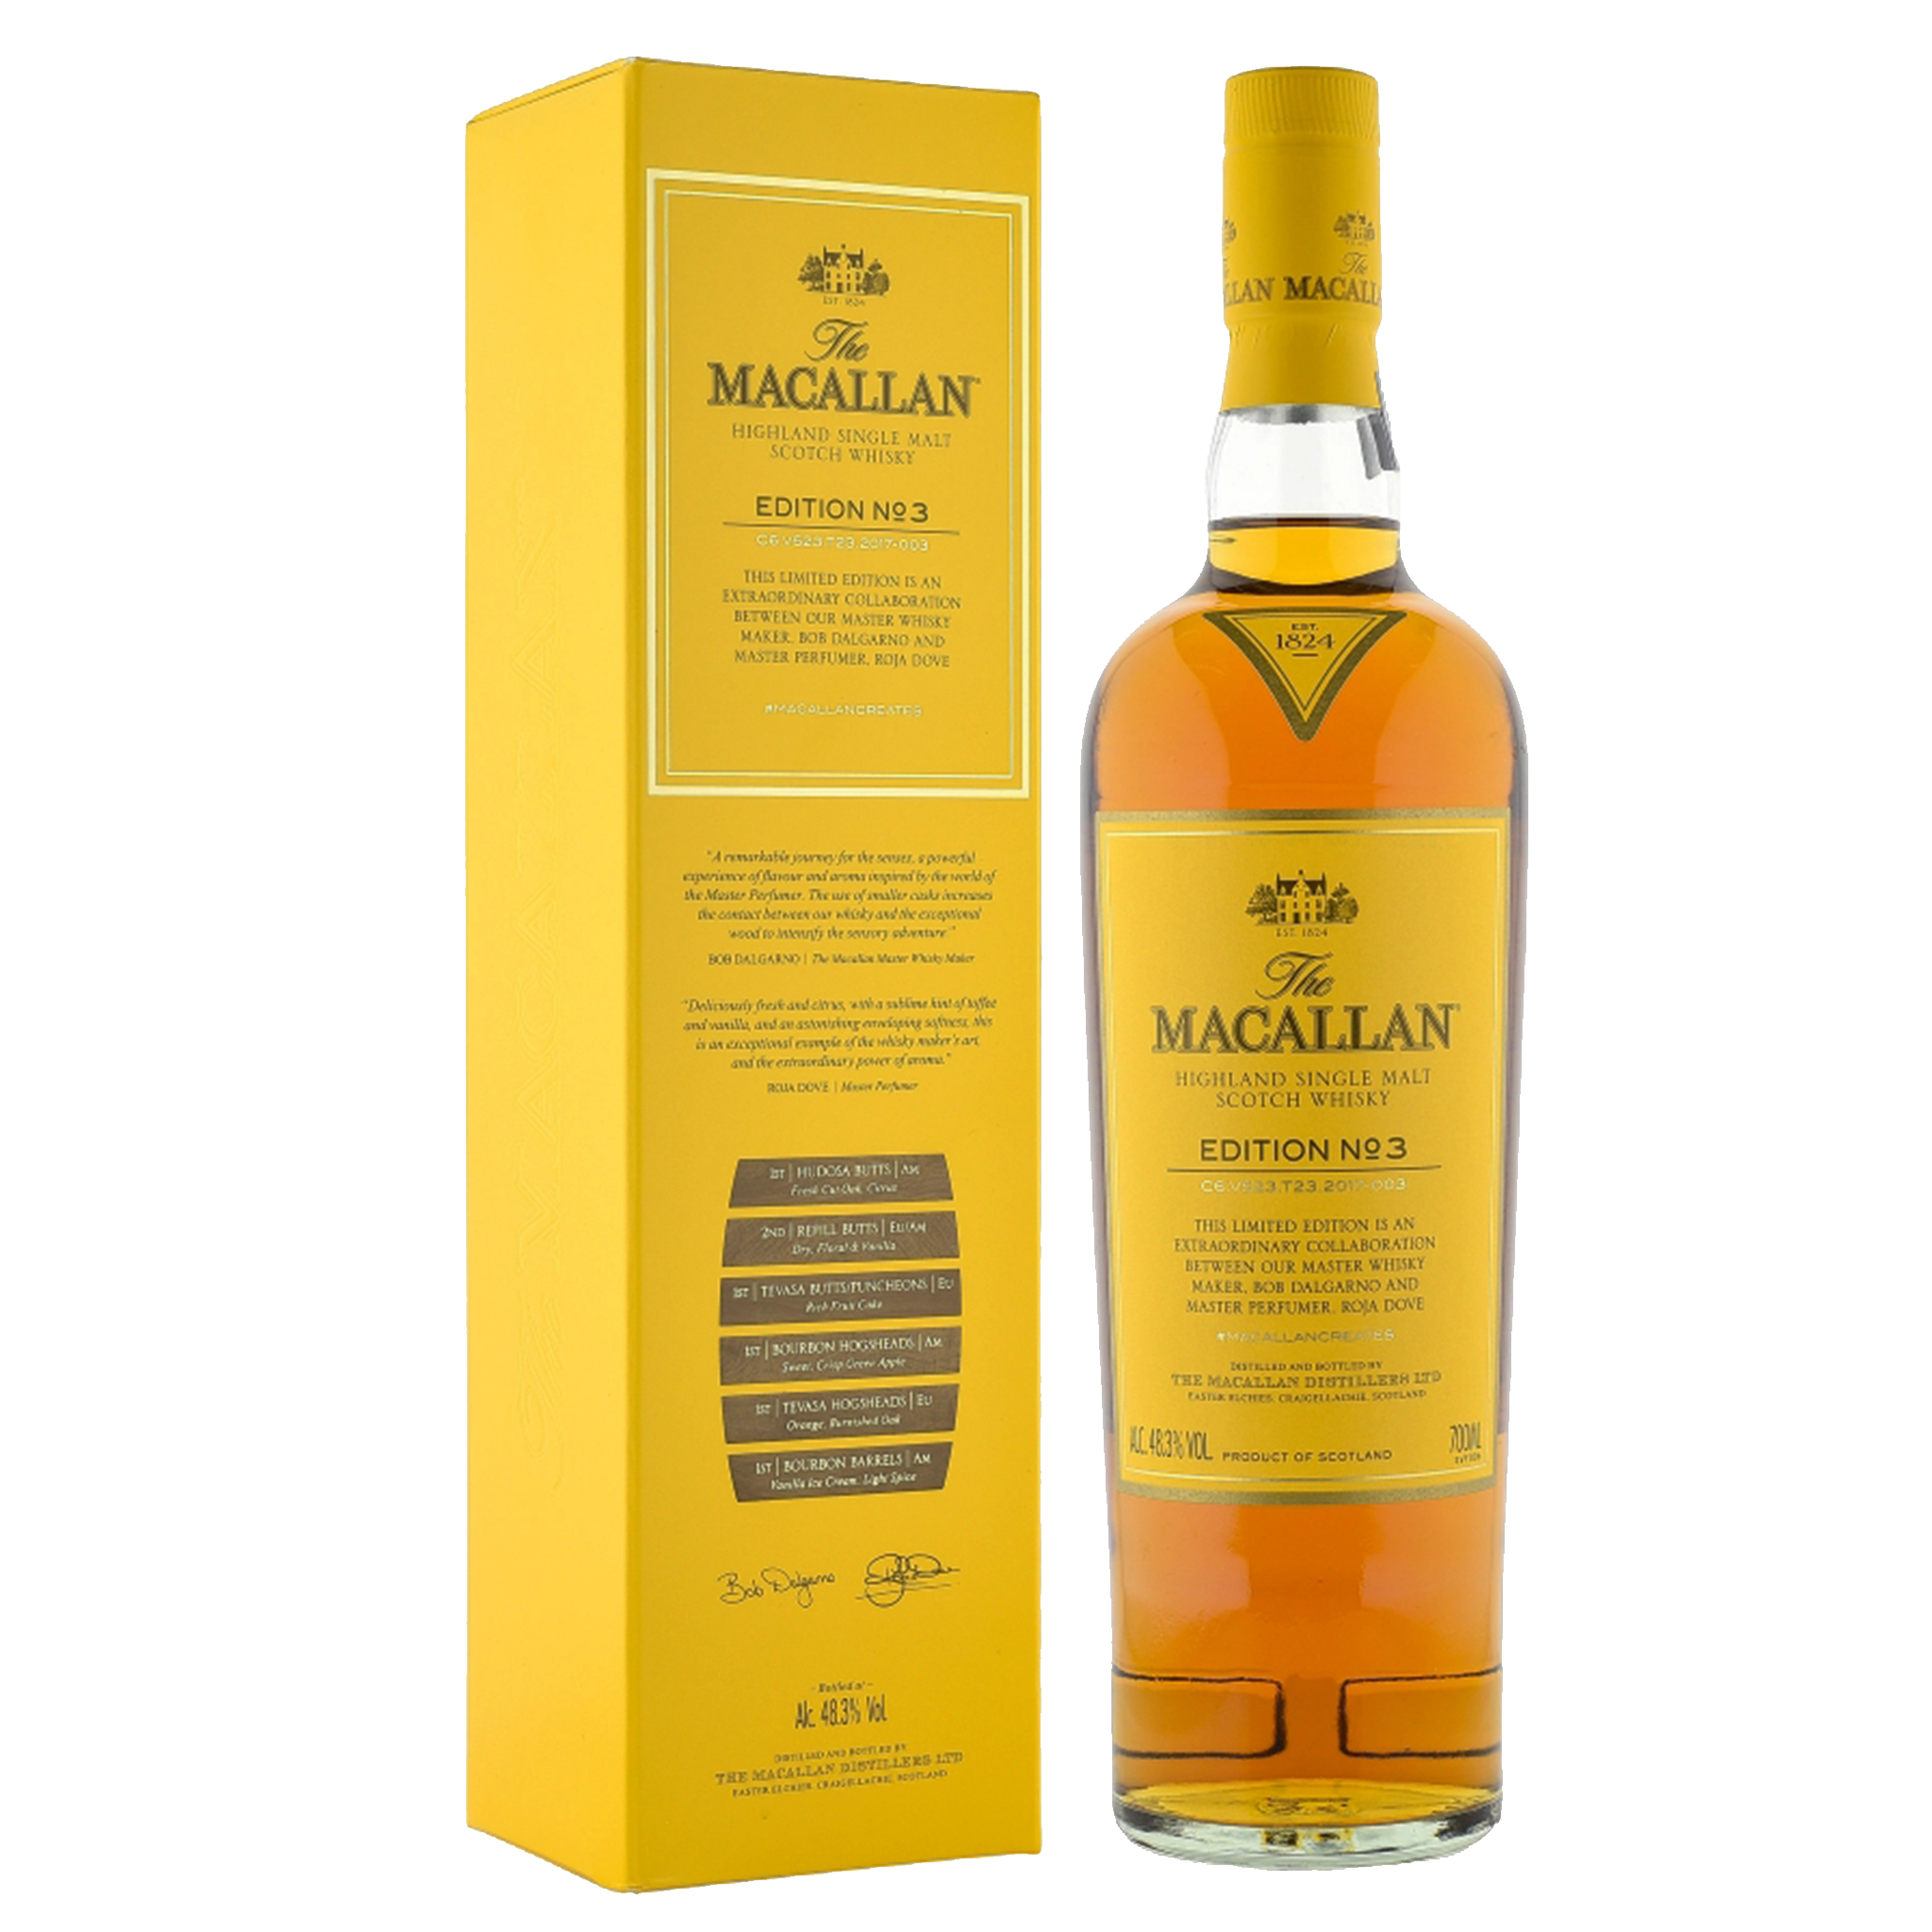 The Macallan EDITION N° 3 Highland Single Malt Scotch Whisky 48,4% Vol. 0,7l in Giftbox